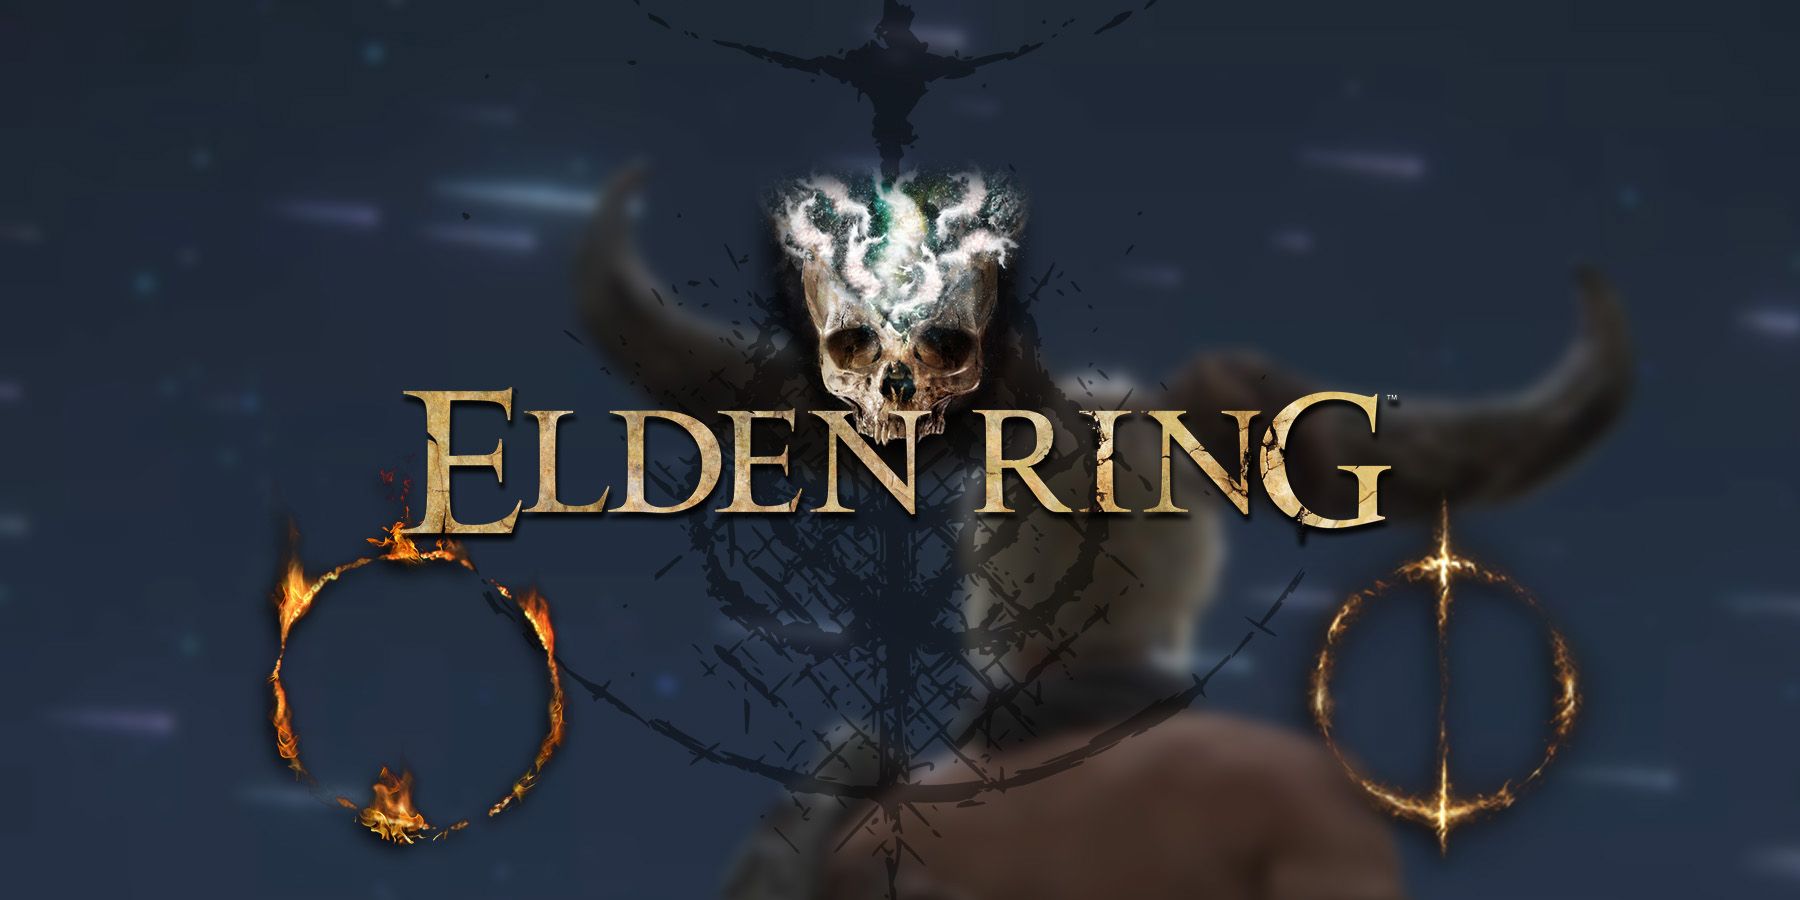 After Elden Ring, FromSoftware Should Ignore Soulslikes For